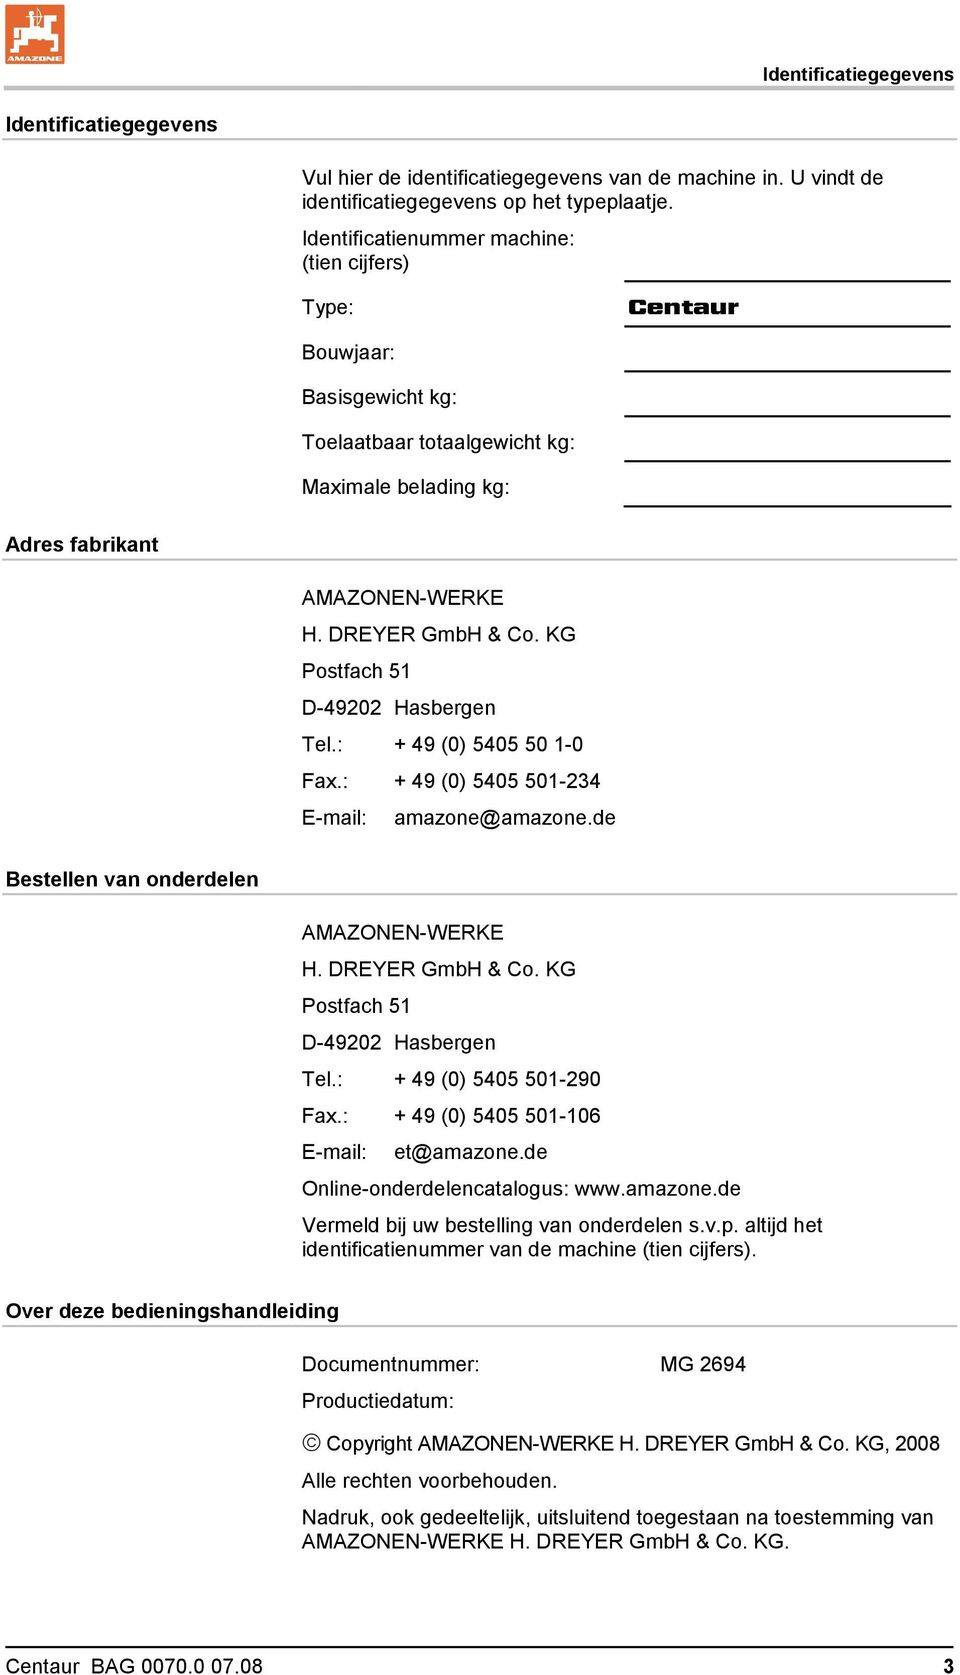 KG Postfach 51 D-49202 Hasbergen Tel.: + 49 (0) 5405 50 1-0 Fax.: + 49 (0) 5405 501-234 E-mail: amazone@amazone.de Bestellen van onderdelen AMAZONEN-WERKE H. DREYER GmbH & Co.